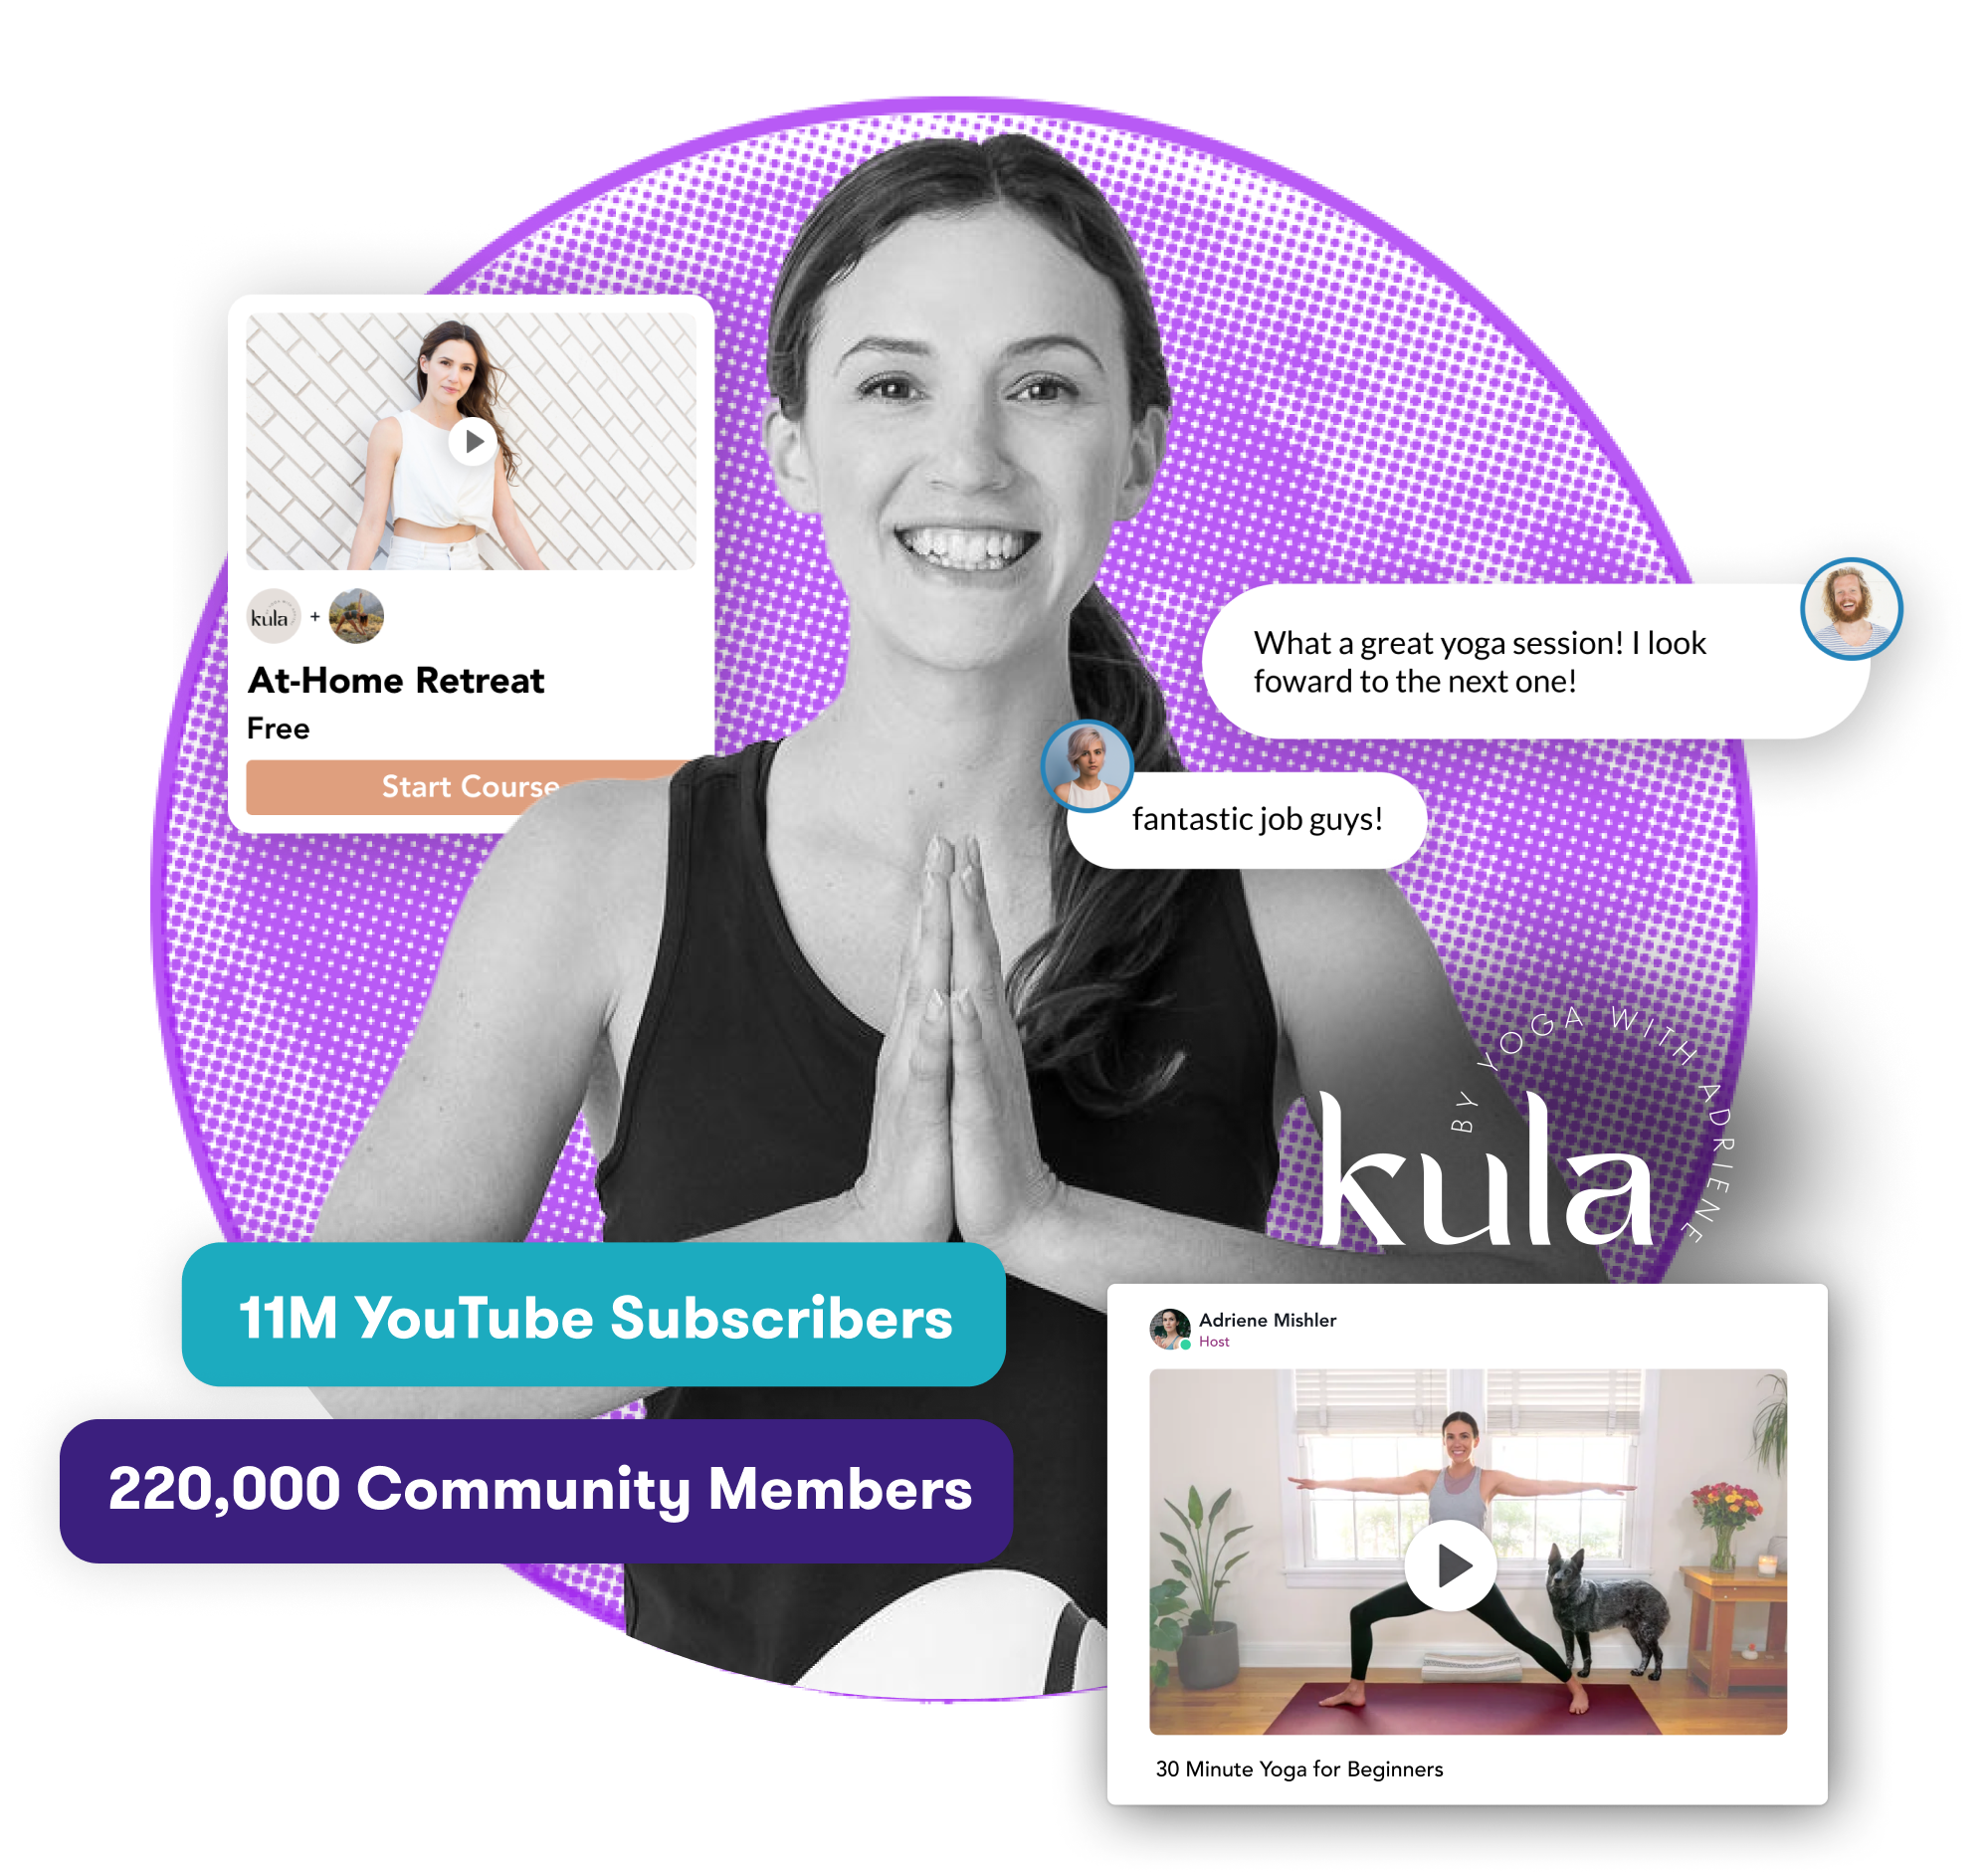 Pro YT creators - hero section - Kula by Yoga with Adriene